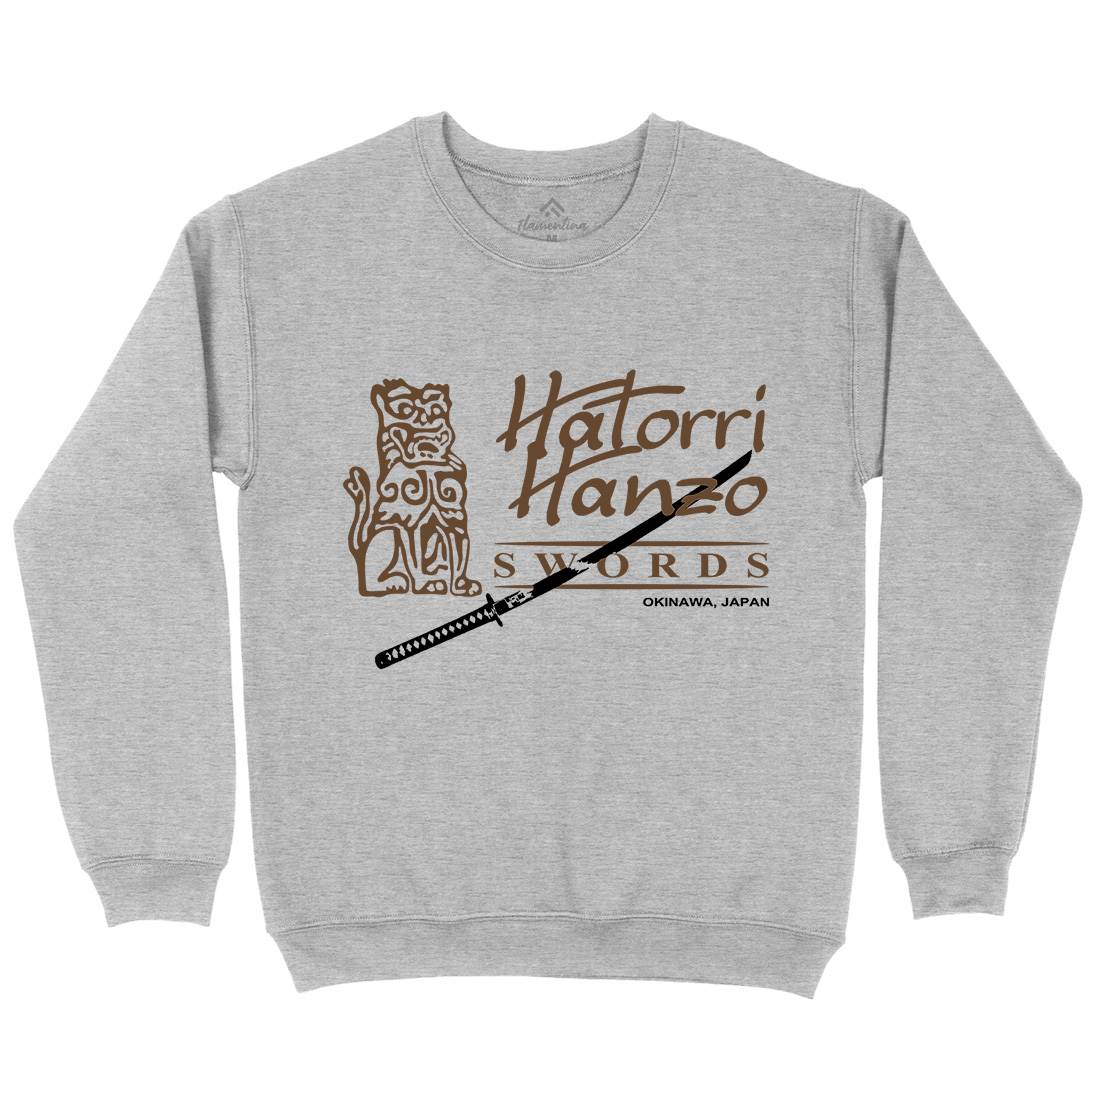 Hattori Hanzo Mens Crew Neck Sweatshirt Asian D418